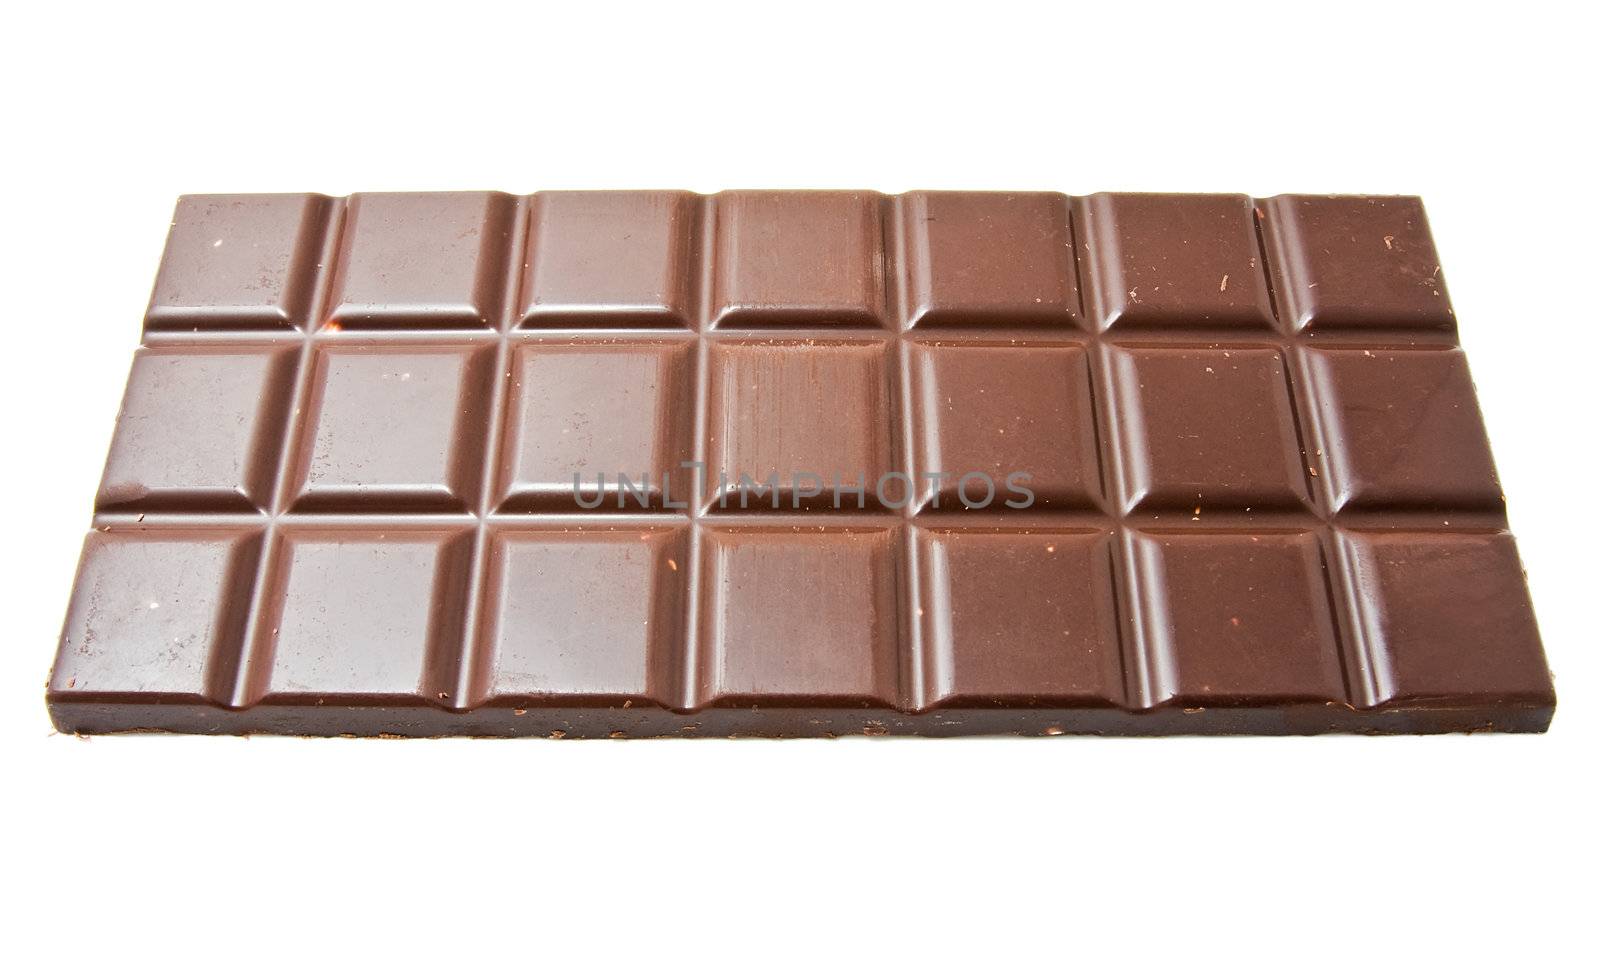 Chocolate bar isolated on white background